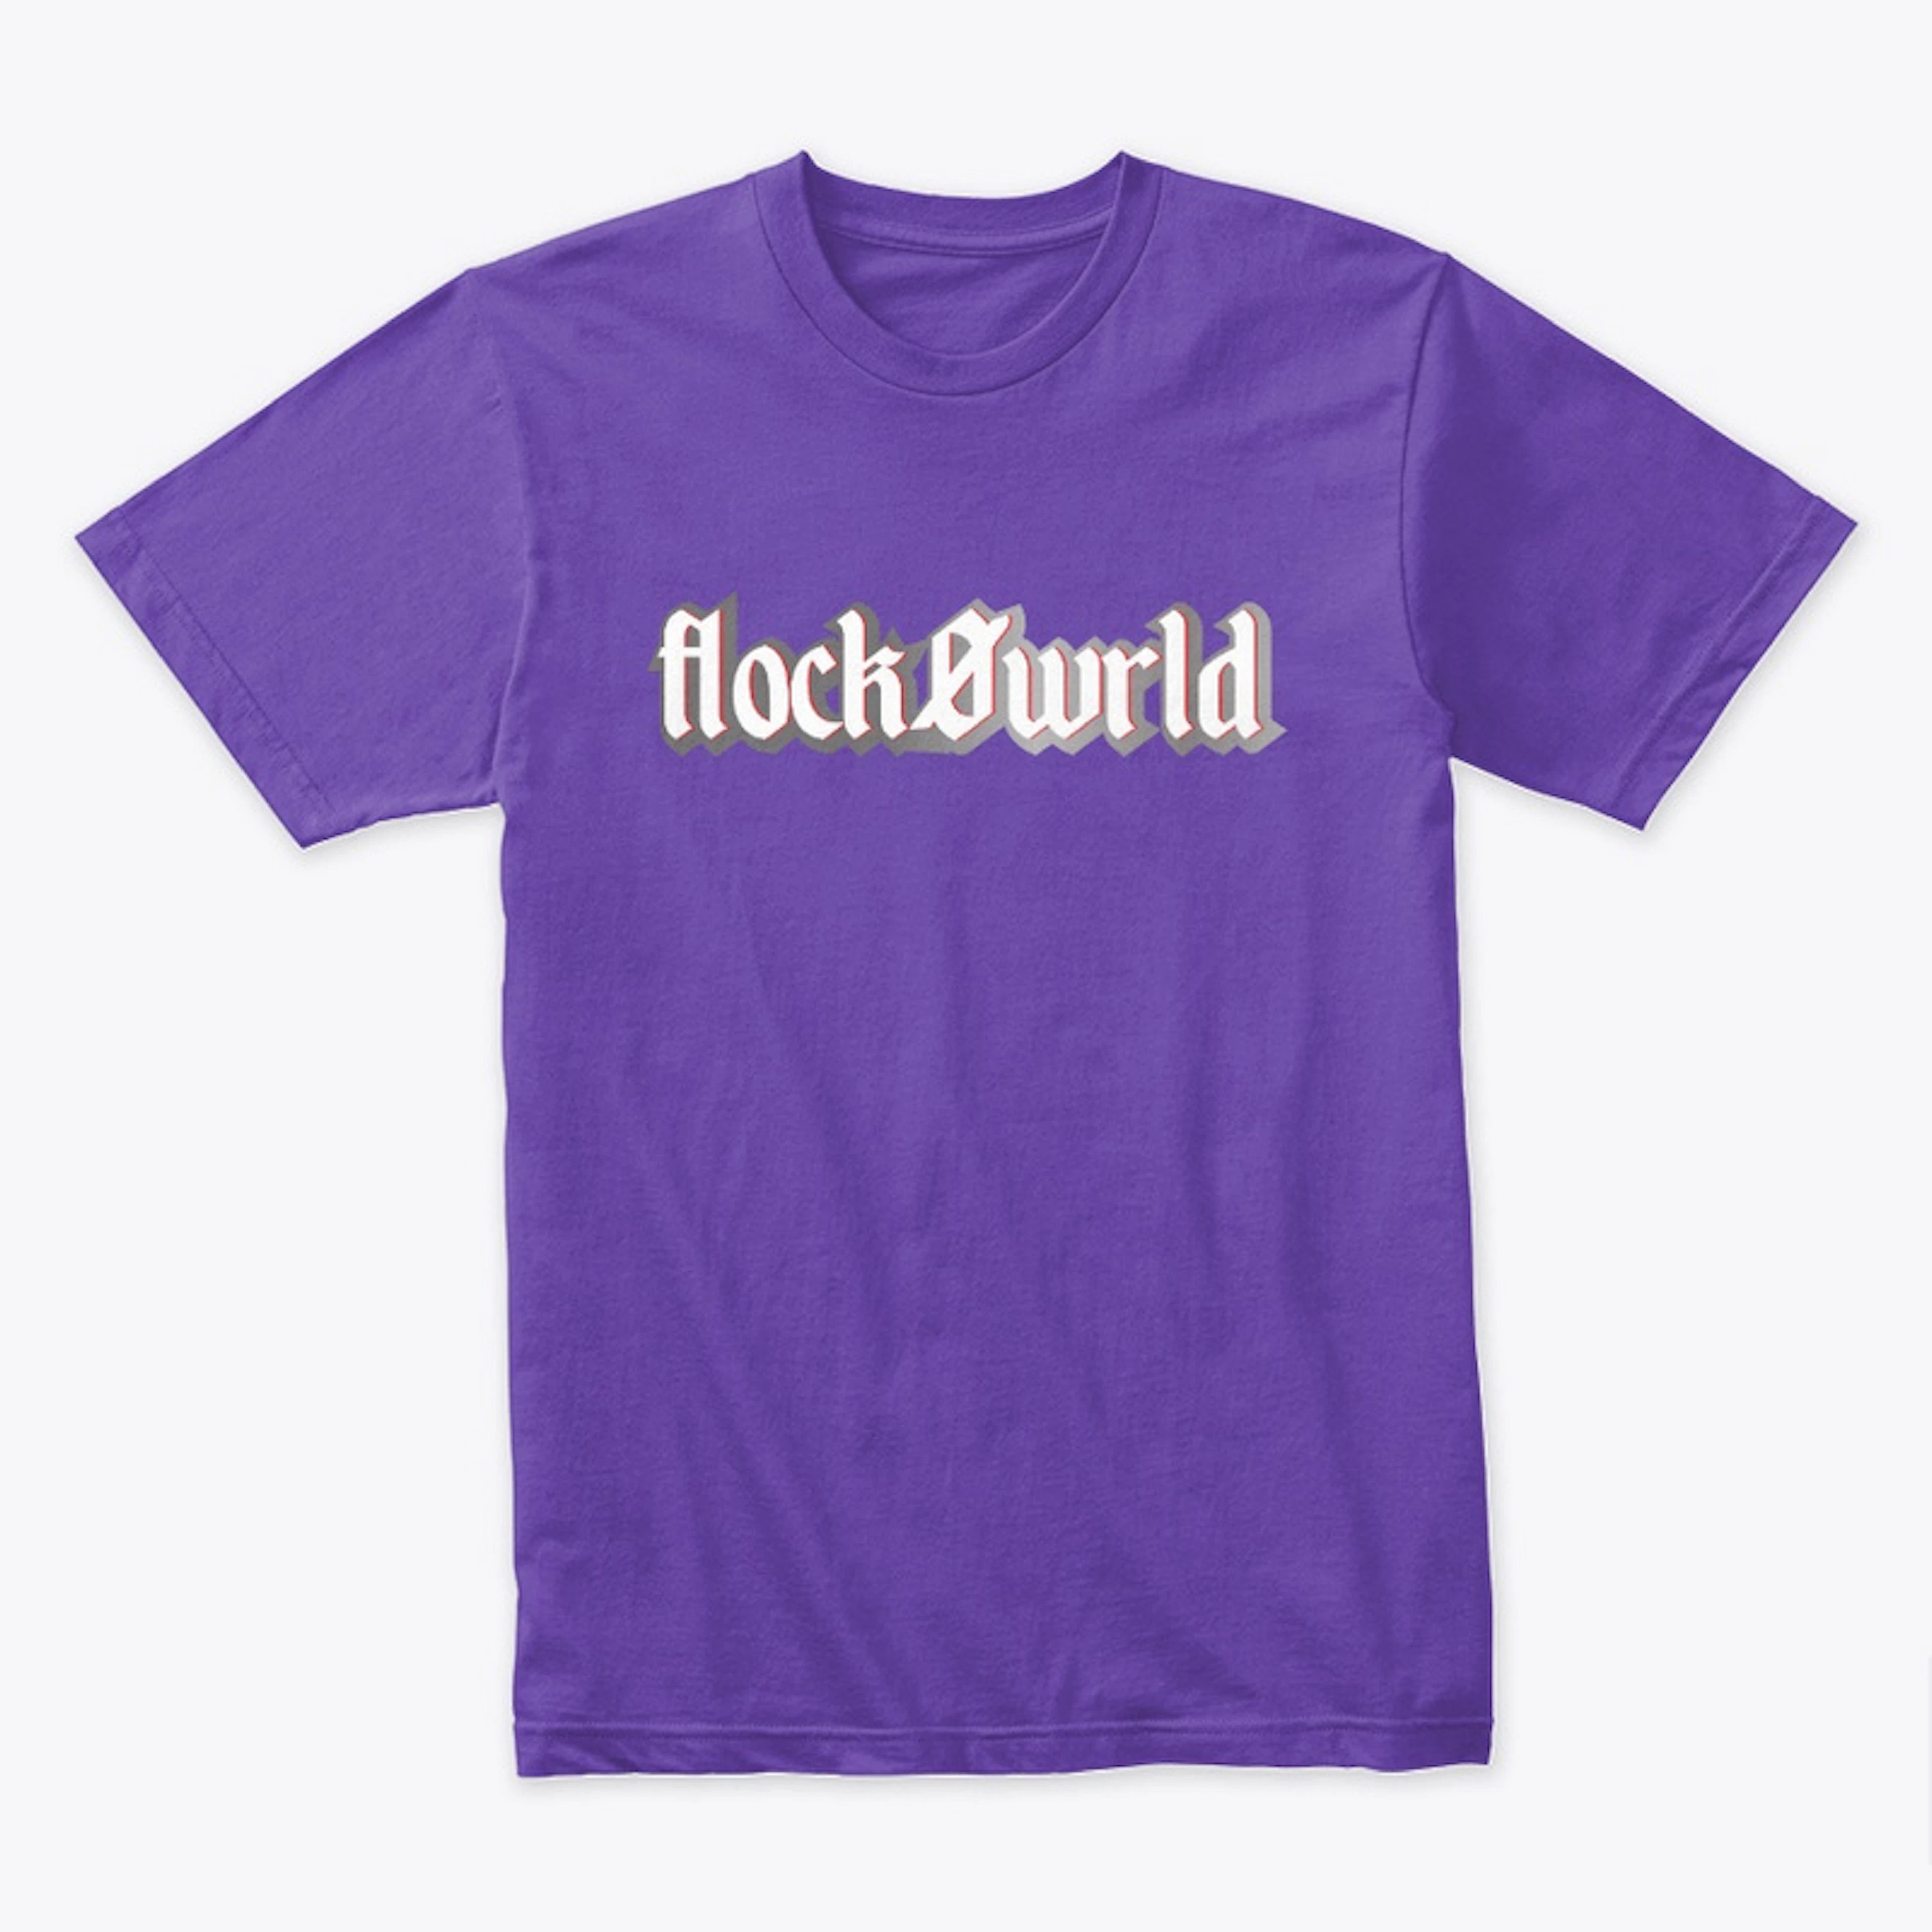 FlockoWrld Premium Men's Purple T-shirt 